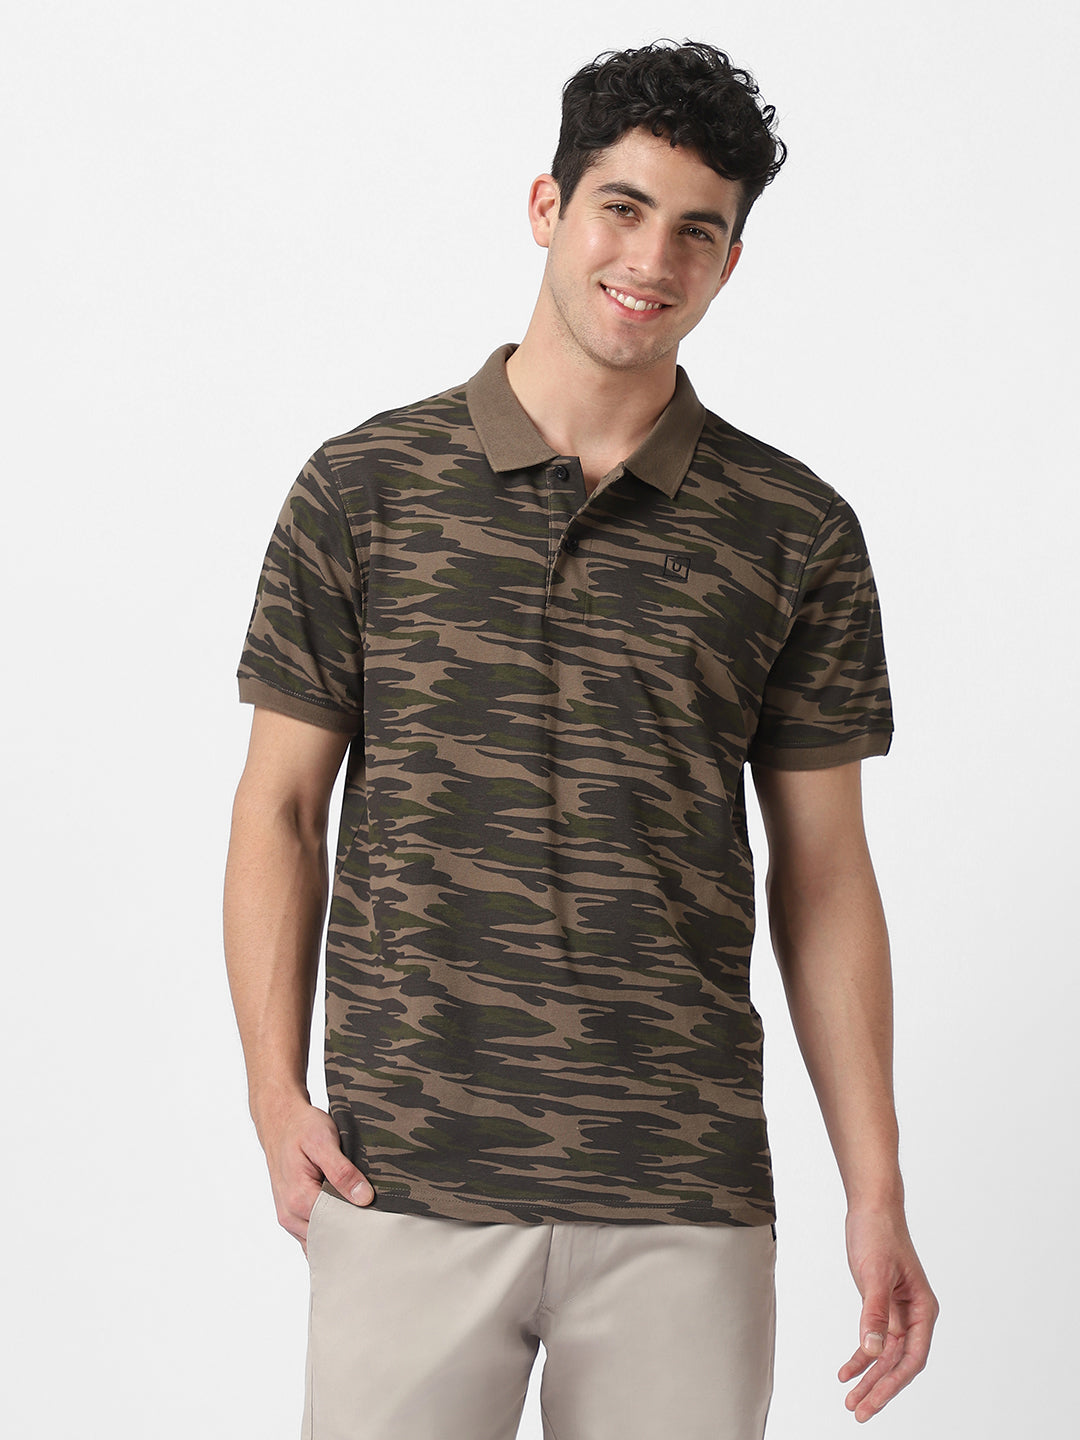 Urbano Fashion Men's Green, Dark Green Military Camouflage Printed Slim Fit Cotton Polo T-Shirt